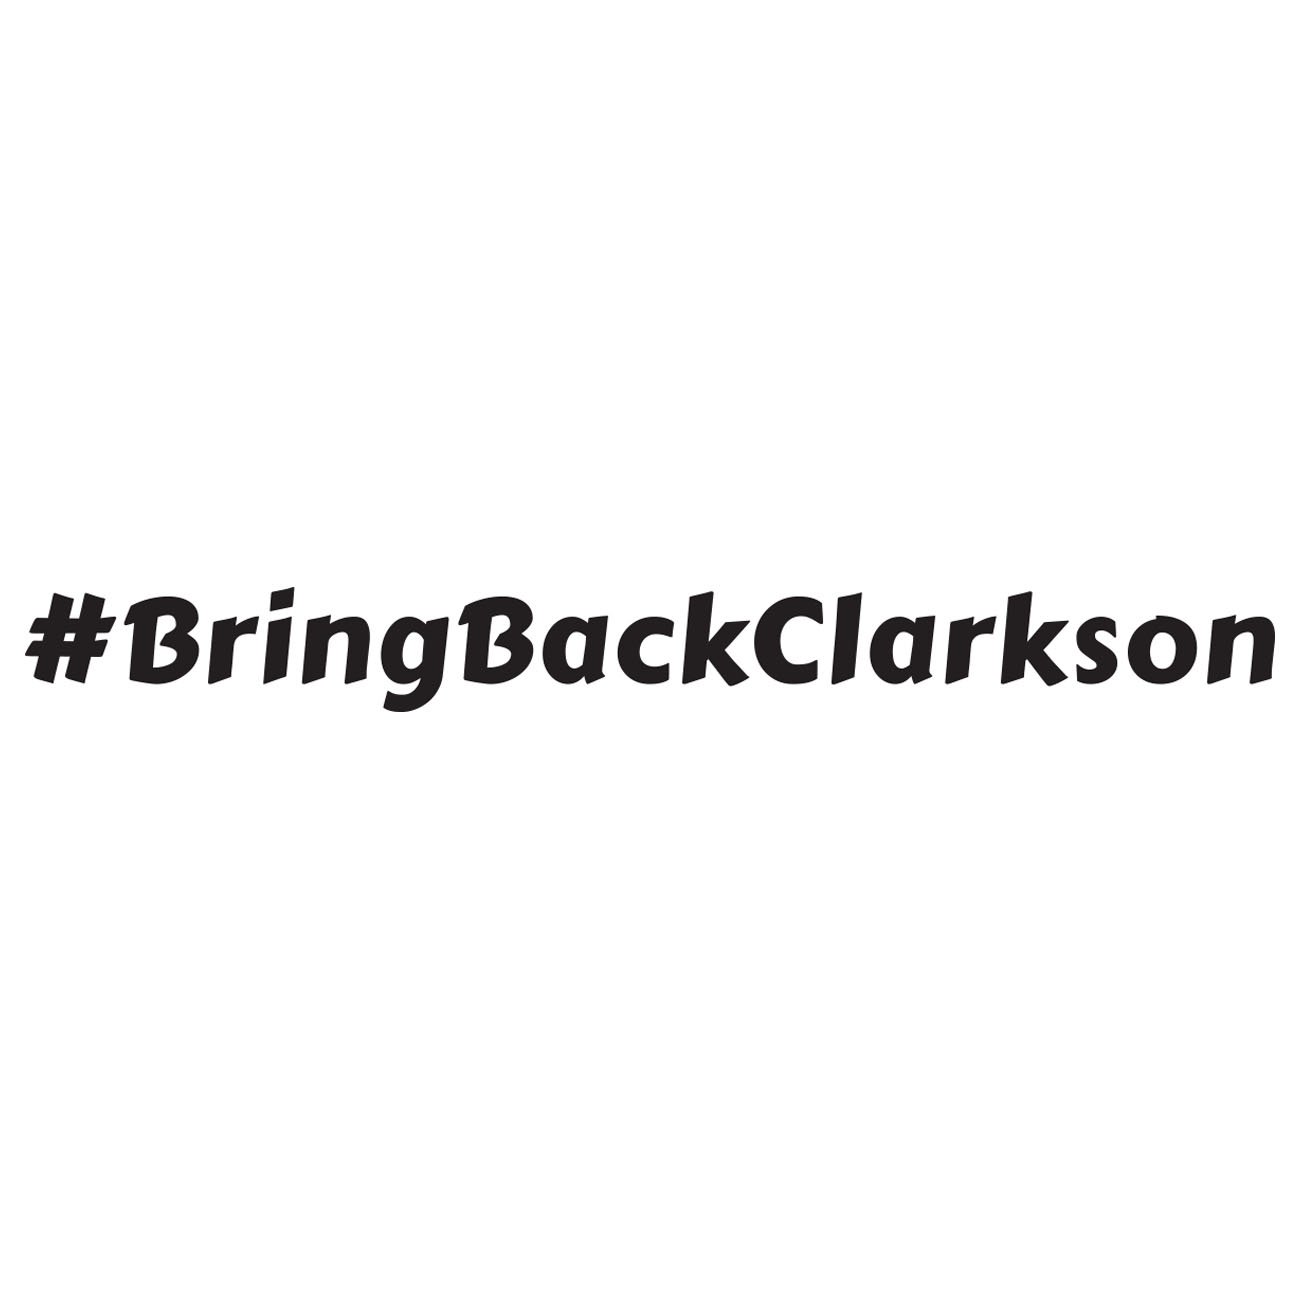 Bring back clarkson 1 - #BringBackClarkson